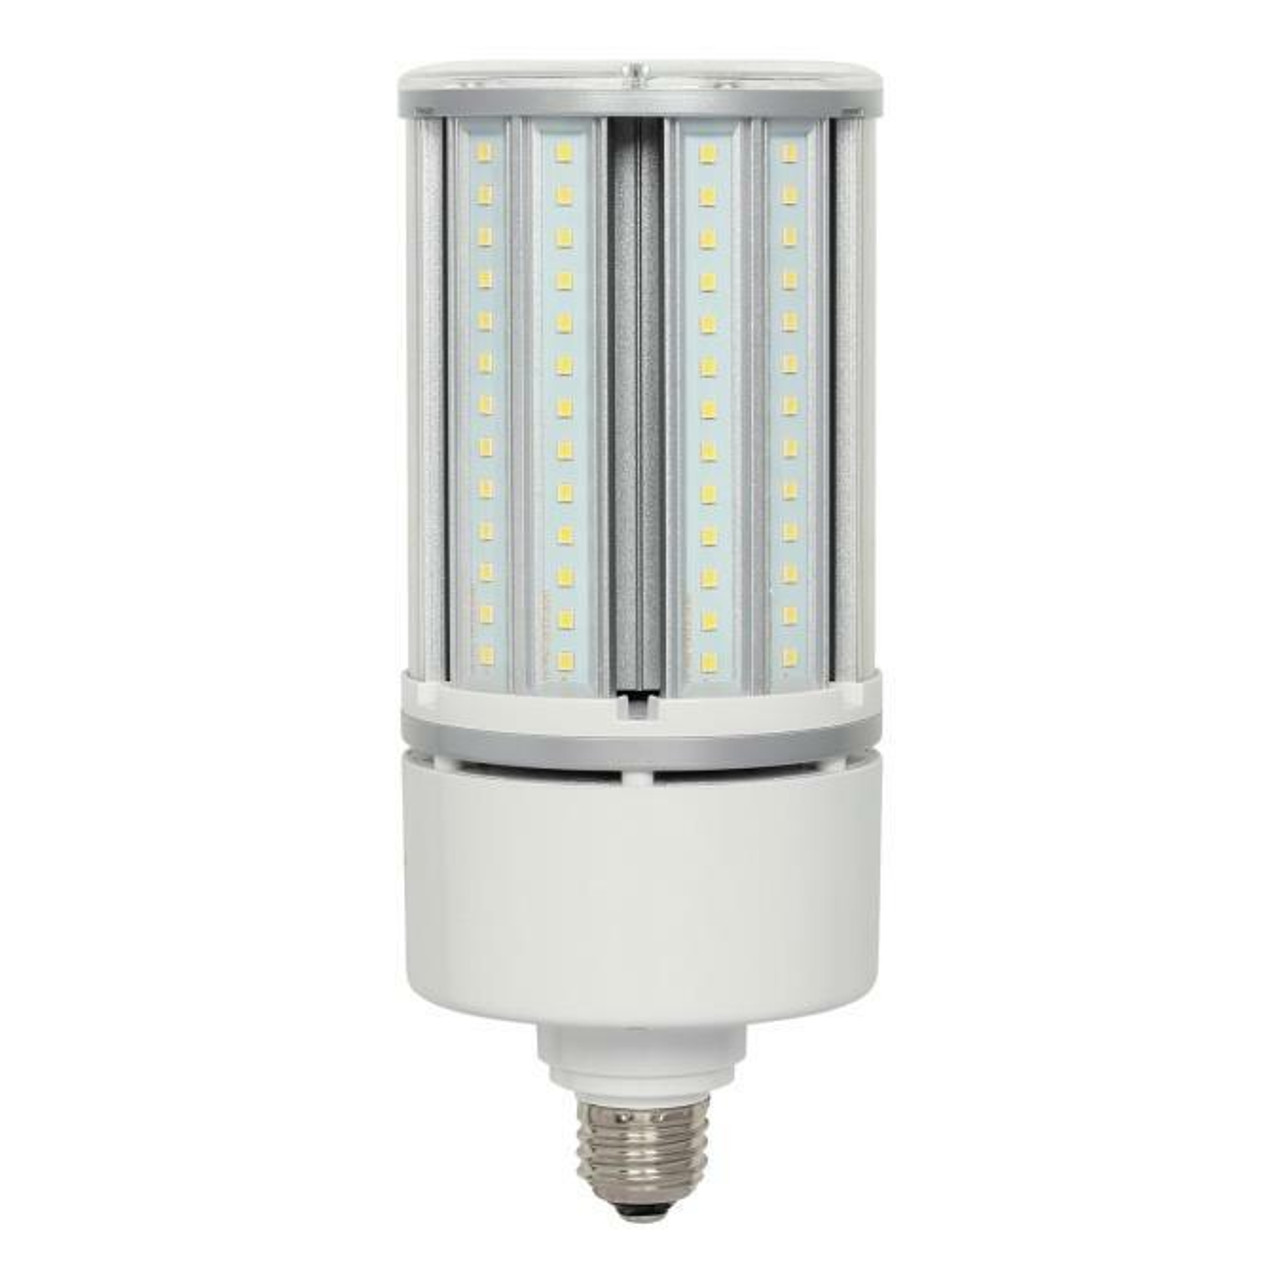 Plons vragen Fauteuil Westinghouse 3516300 45 Watt (300 Watt Equivalent) T30 High Lumen LED Light  Bulb 5000K Daylight E26 (Medium) Base, 120-277V